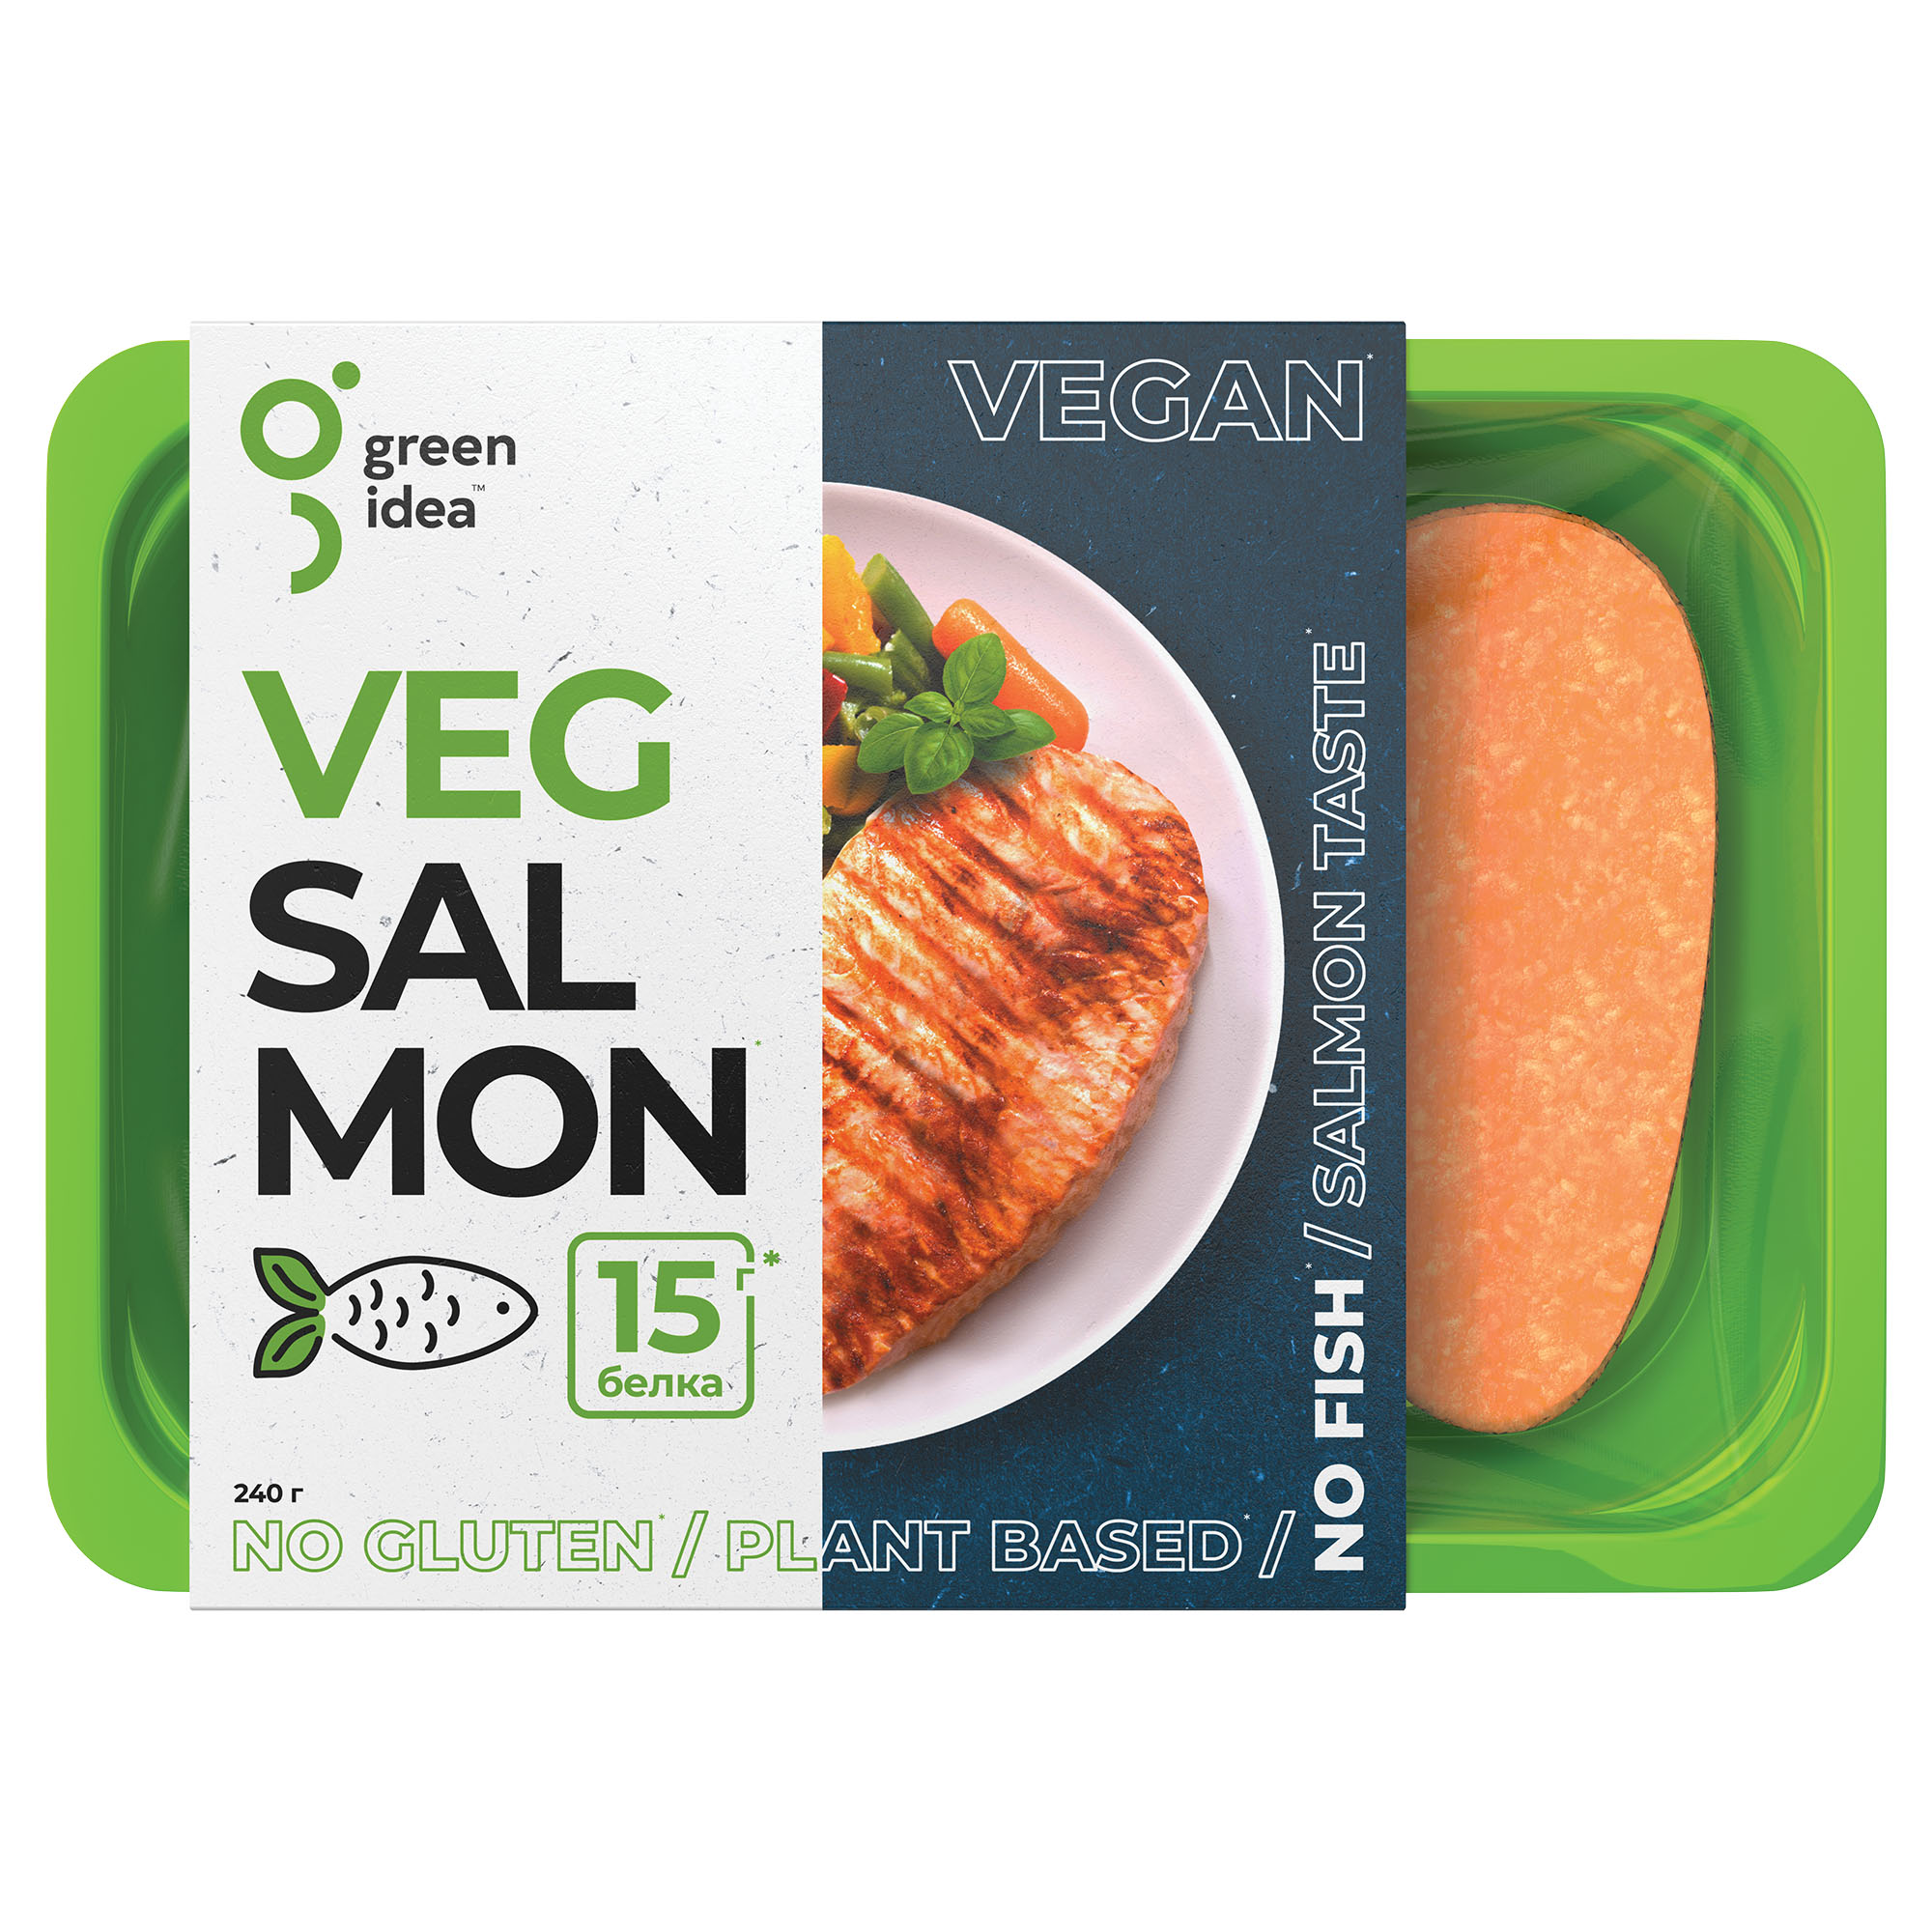 VEG SALMON with salmon flavor